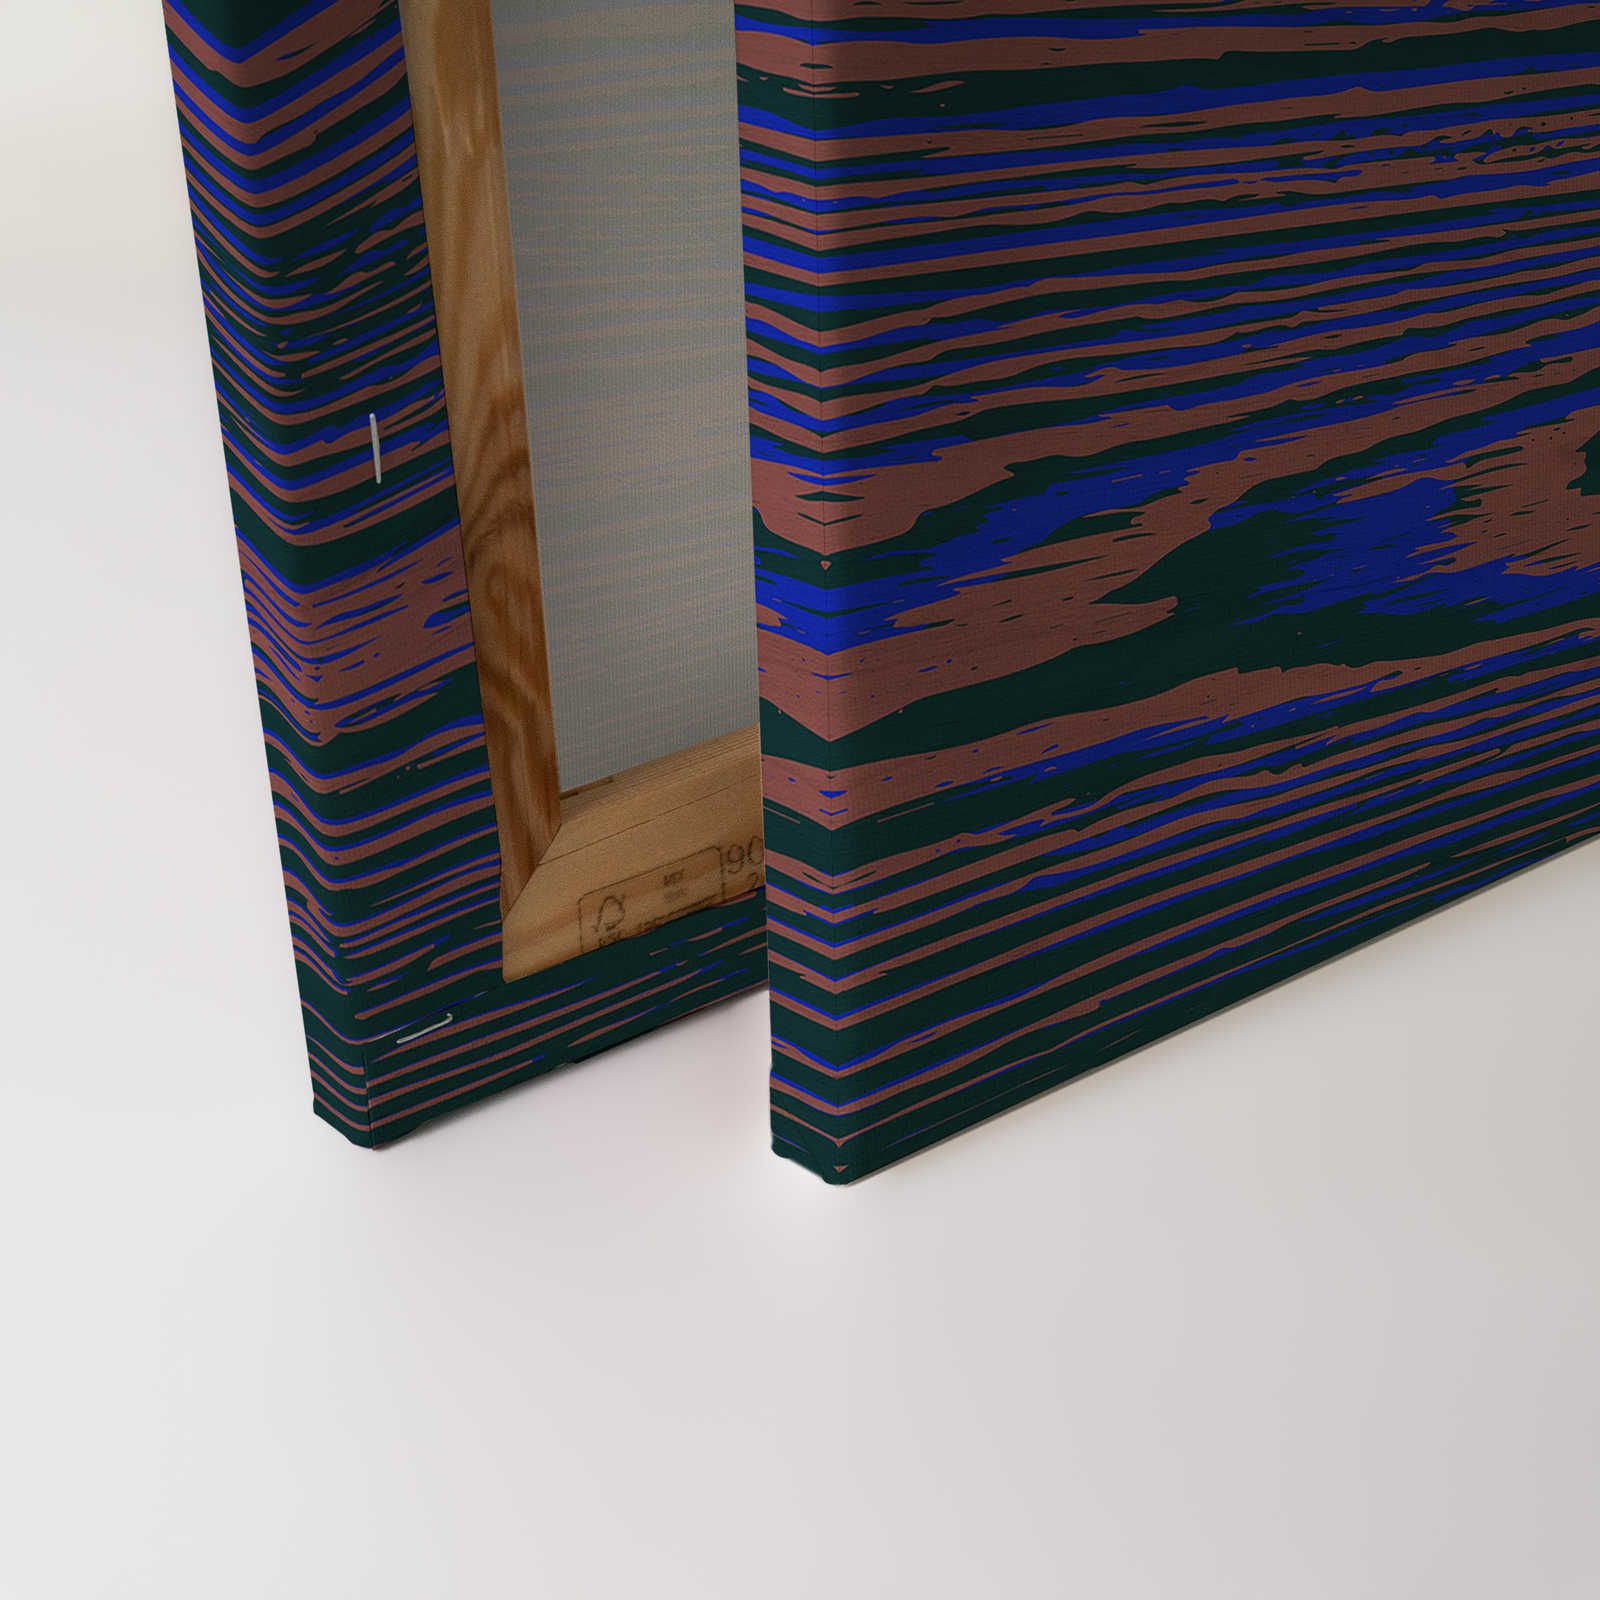             Kontiki 3 - Canvas painting Neon Wood Grain, Purple & Black - 0.90 m x 0.60 m
        